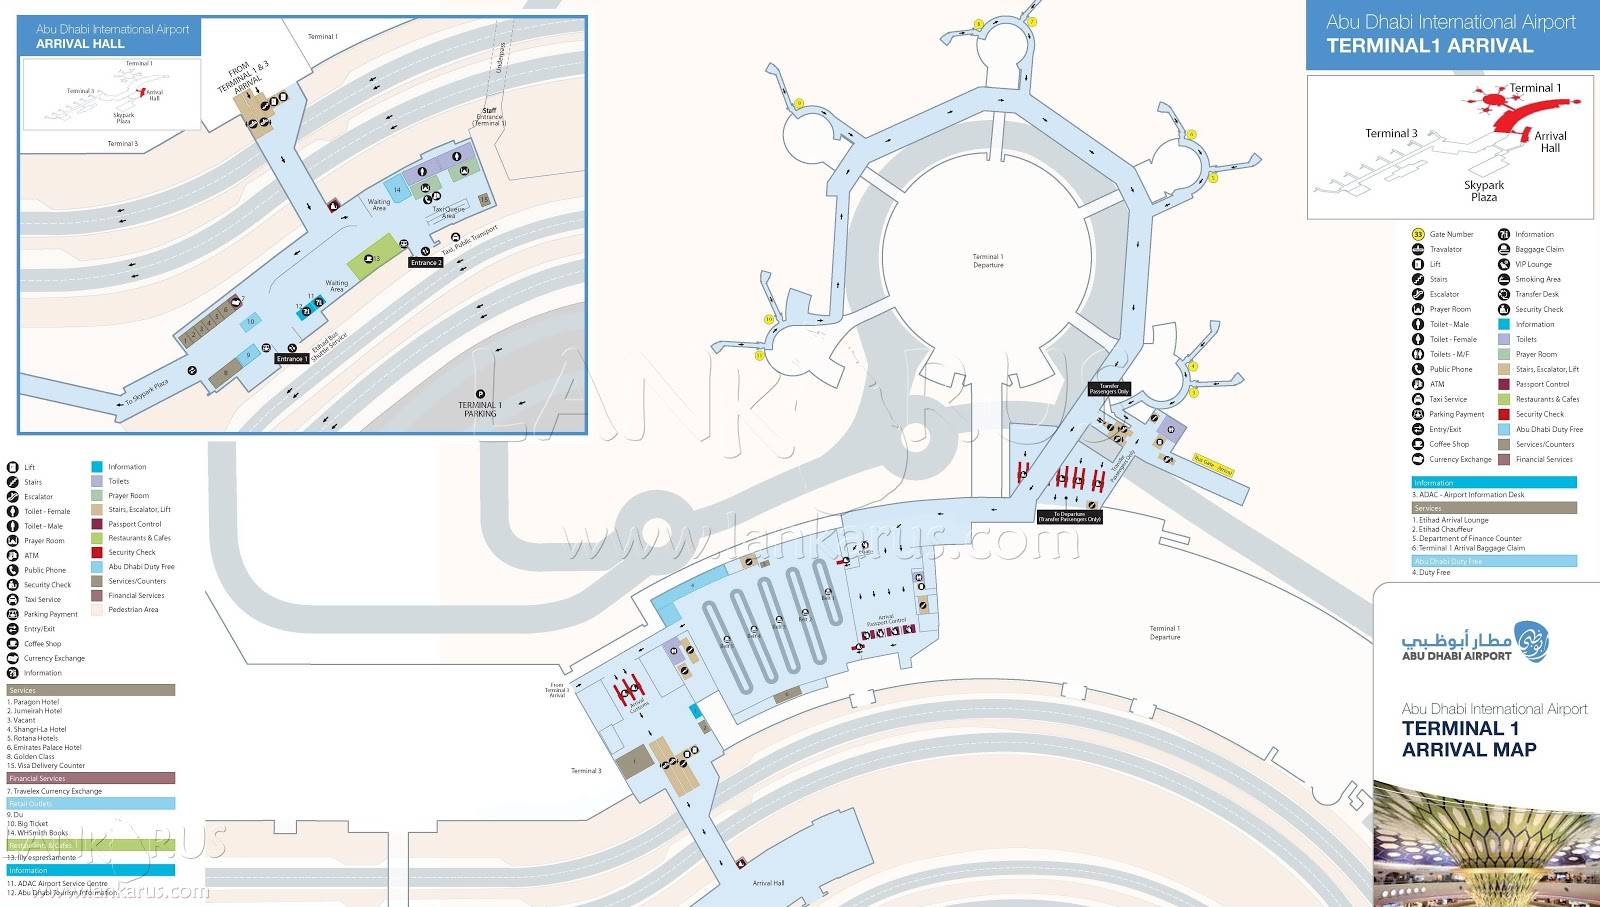 Транзитная зона в аэропорту абу-даби: нужна ли виза при пересадке?